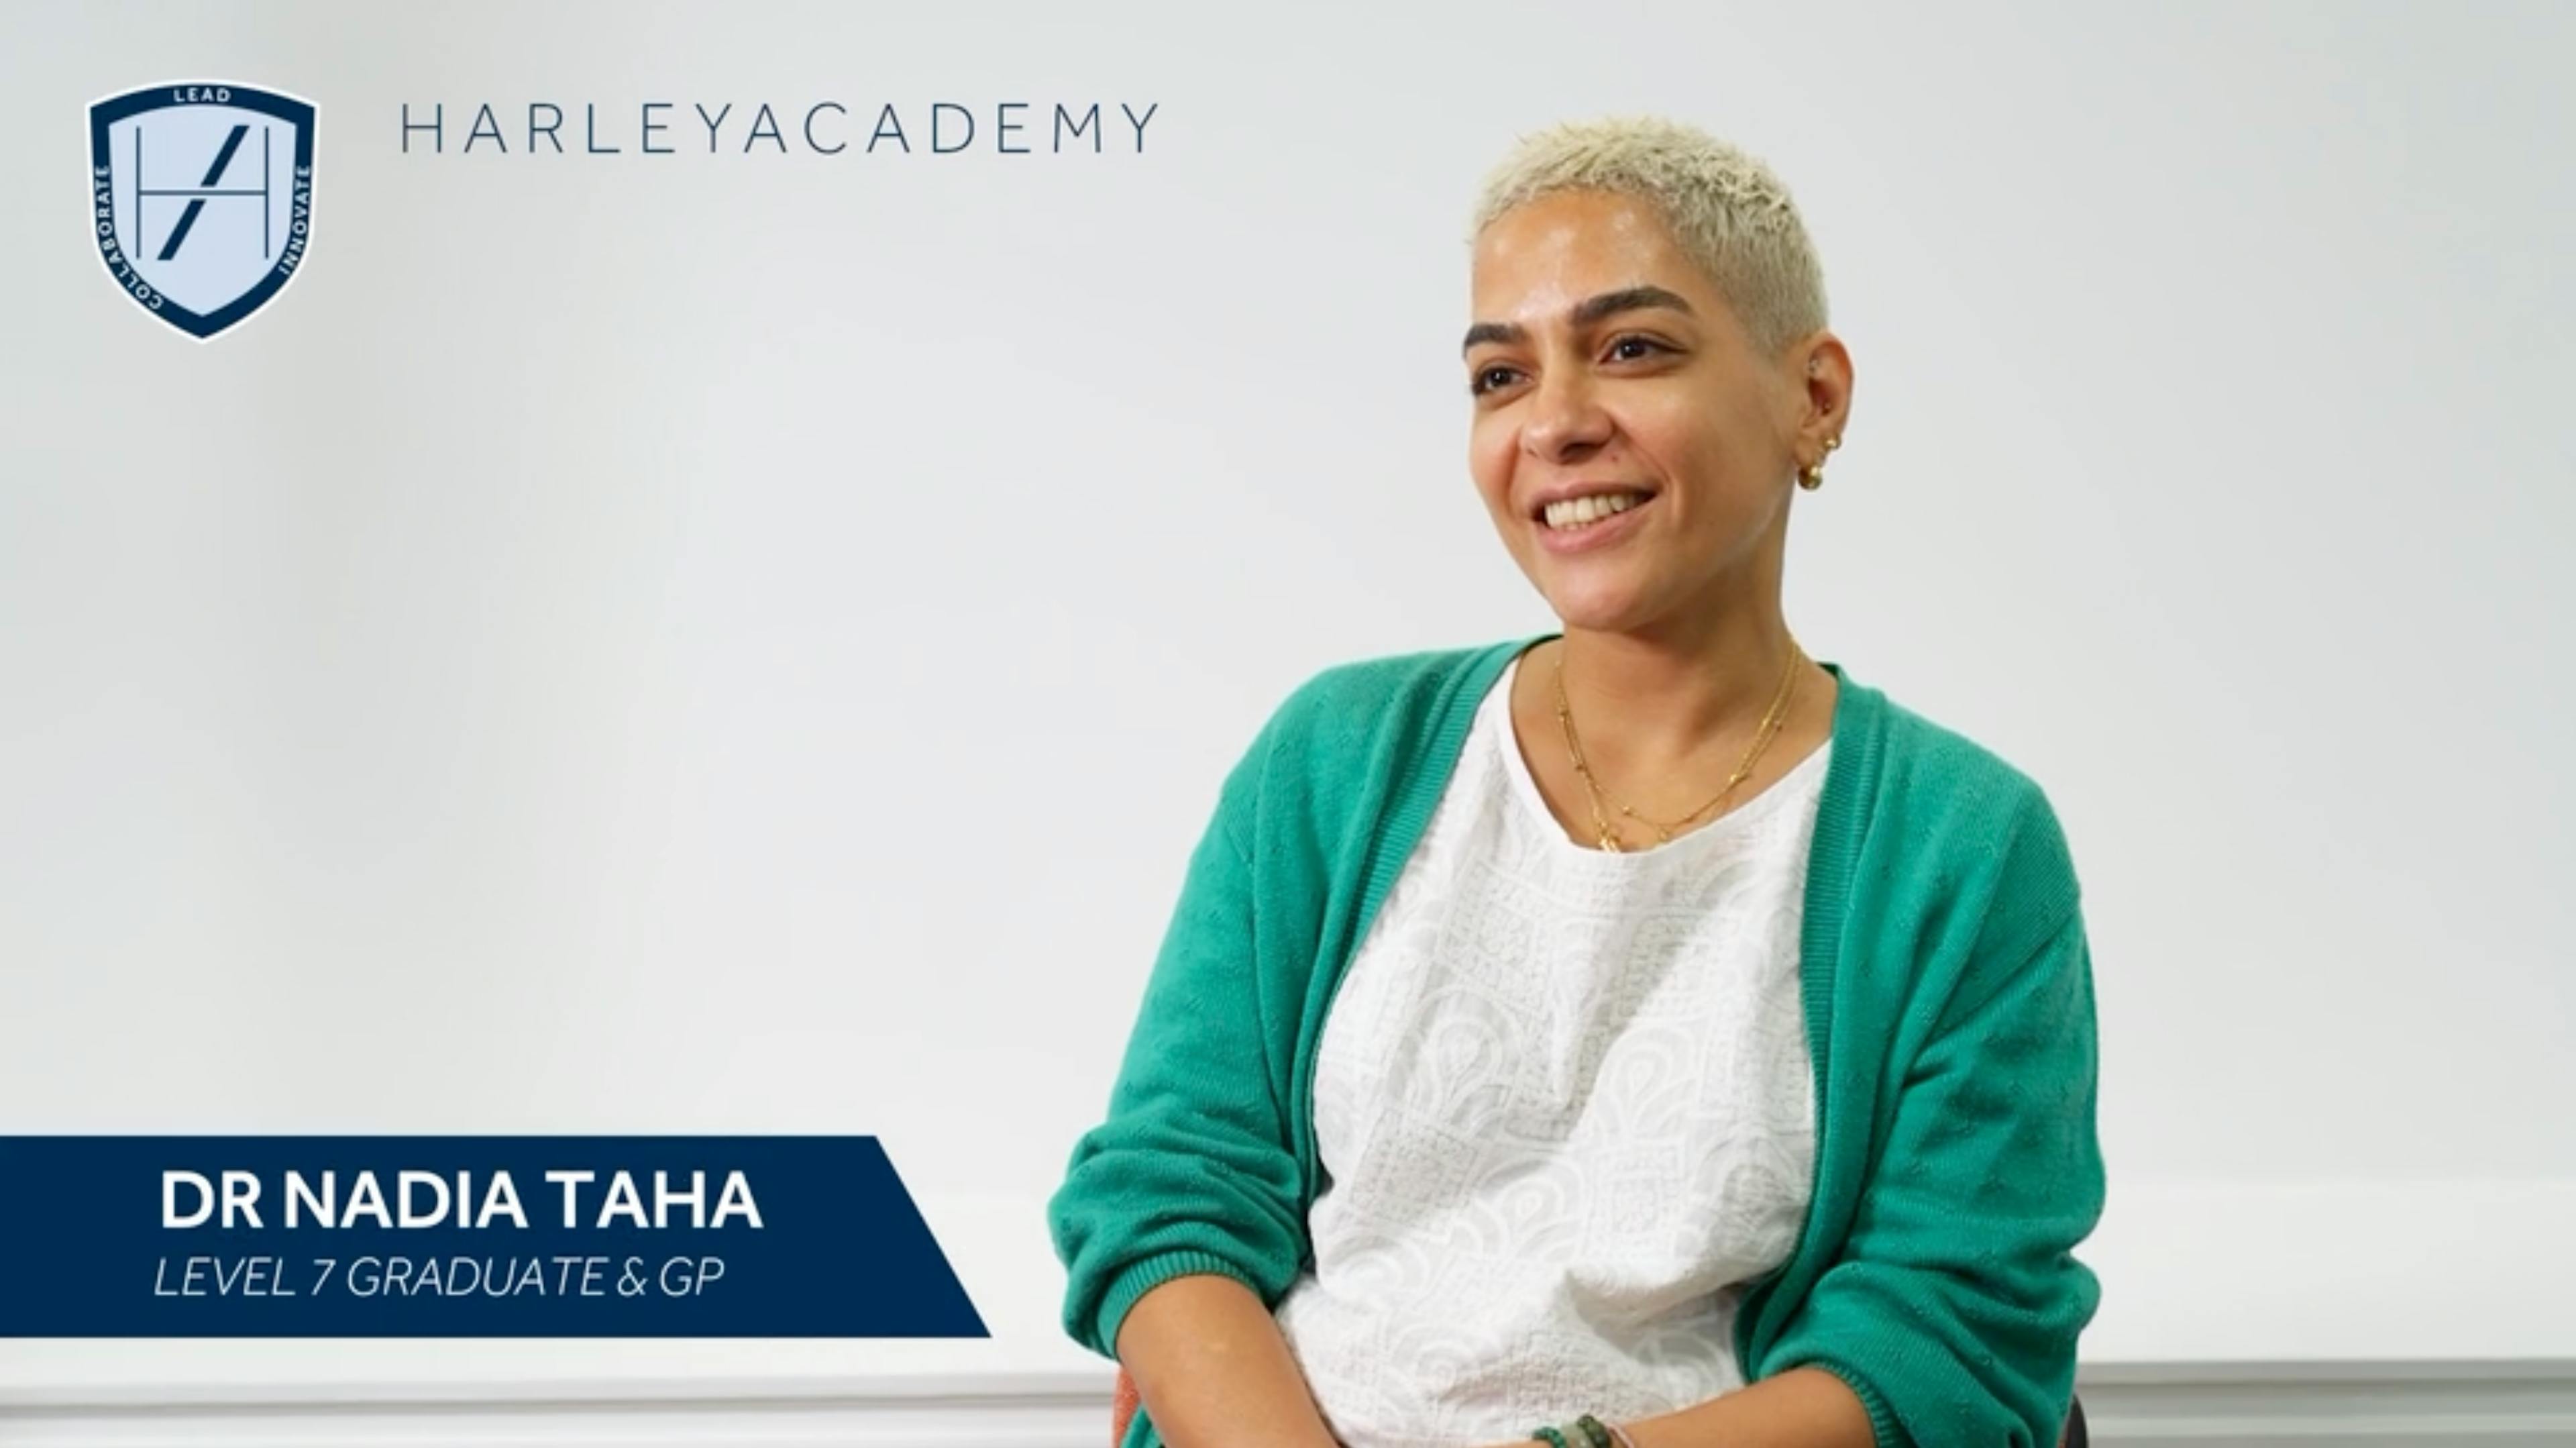 Dr Nadia Taha's testimonial video Harley Academy Level 7 graduate and NHS GP